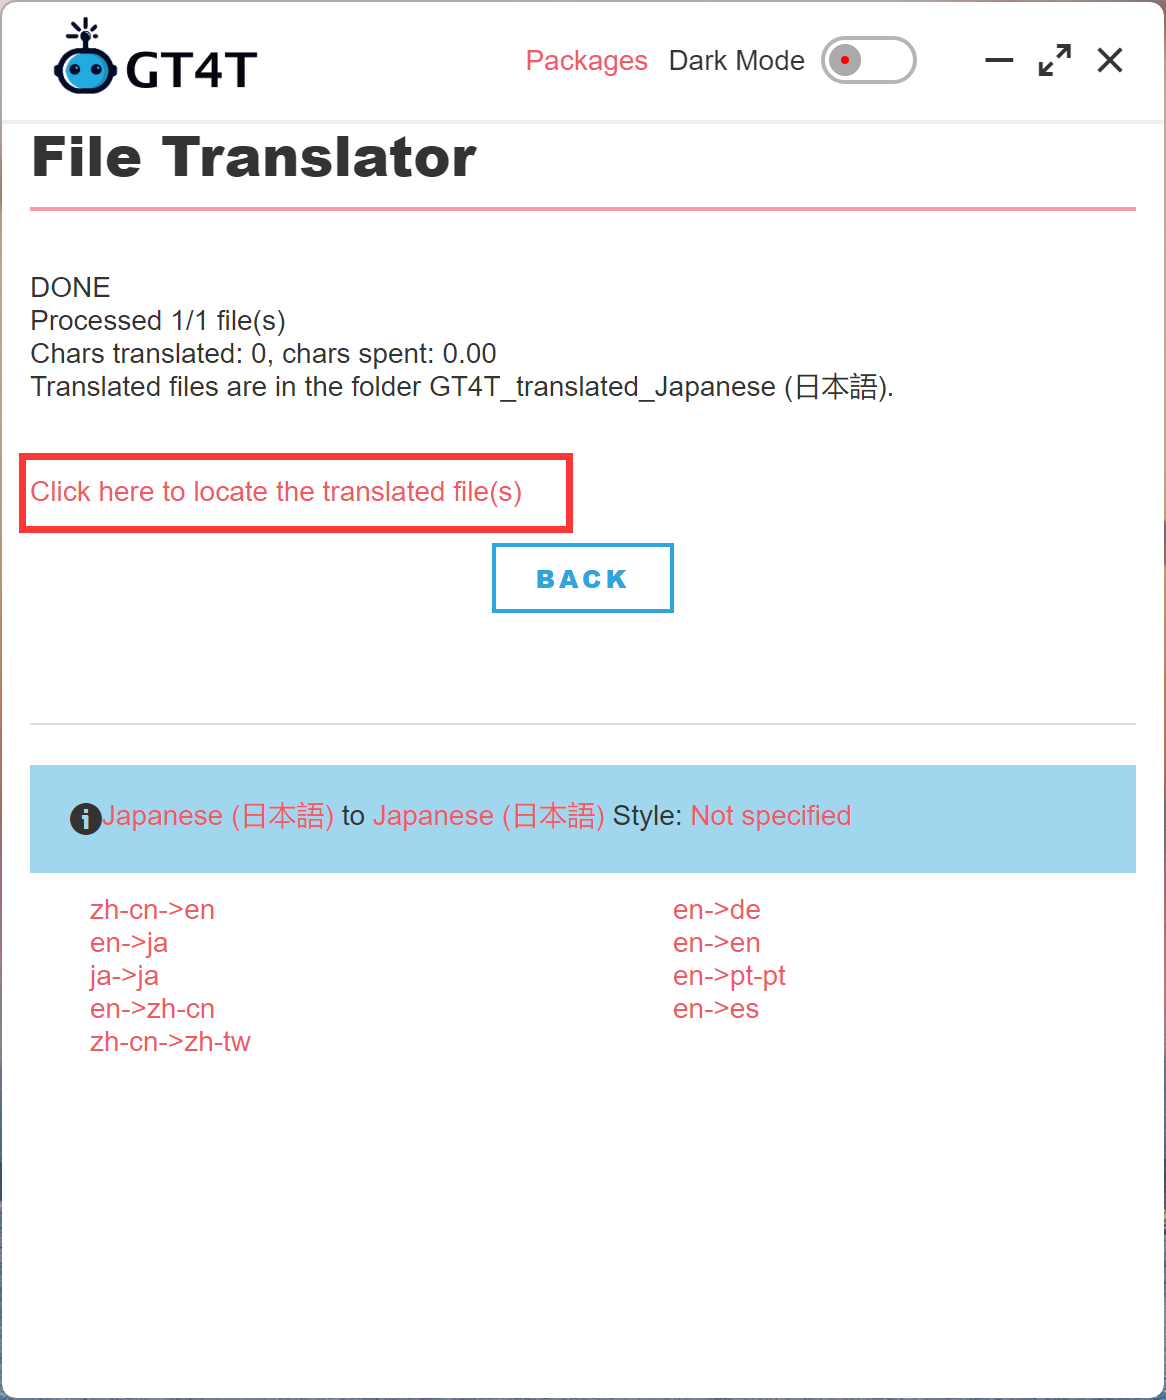 Start the file translator